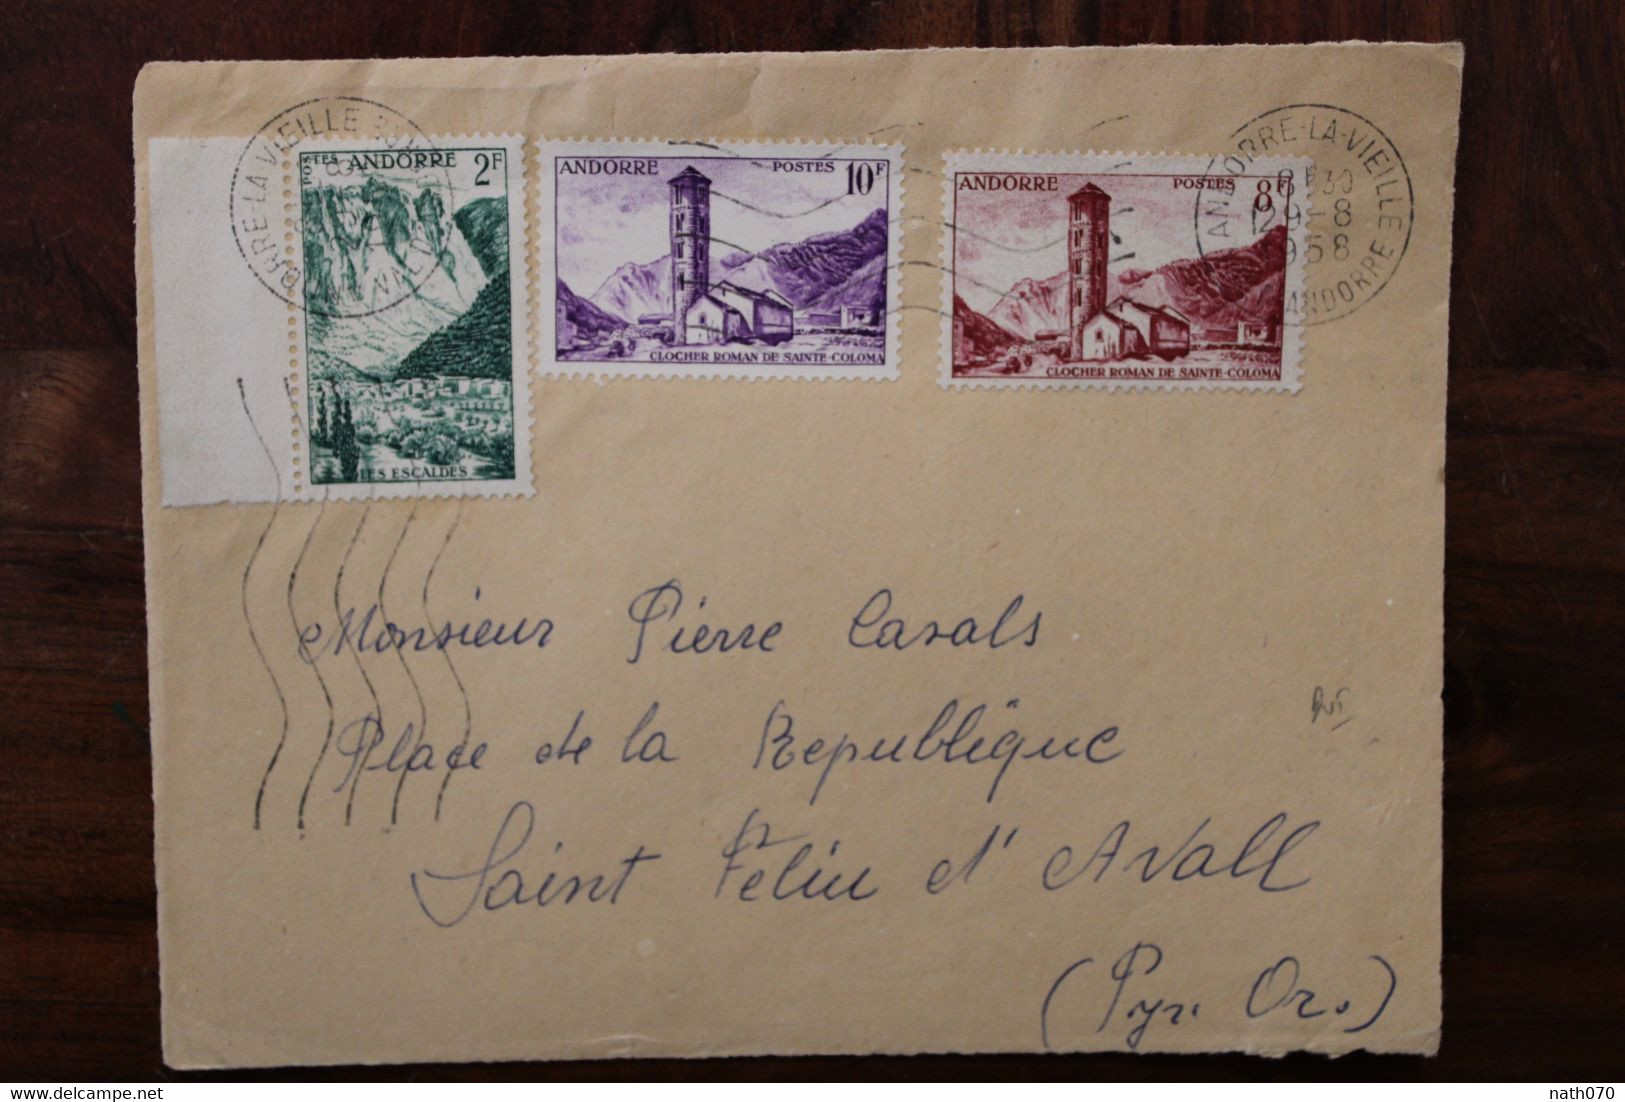 1958 Andorre Front D'enveloppe Cover Les Escaldes Clocher Roman De Ste Coloma - Cartas & Documentos